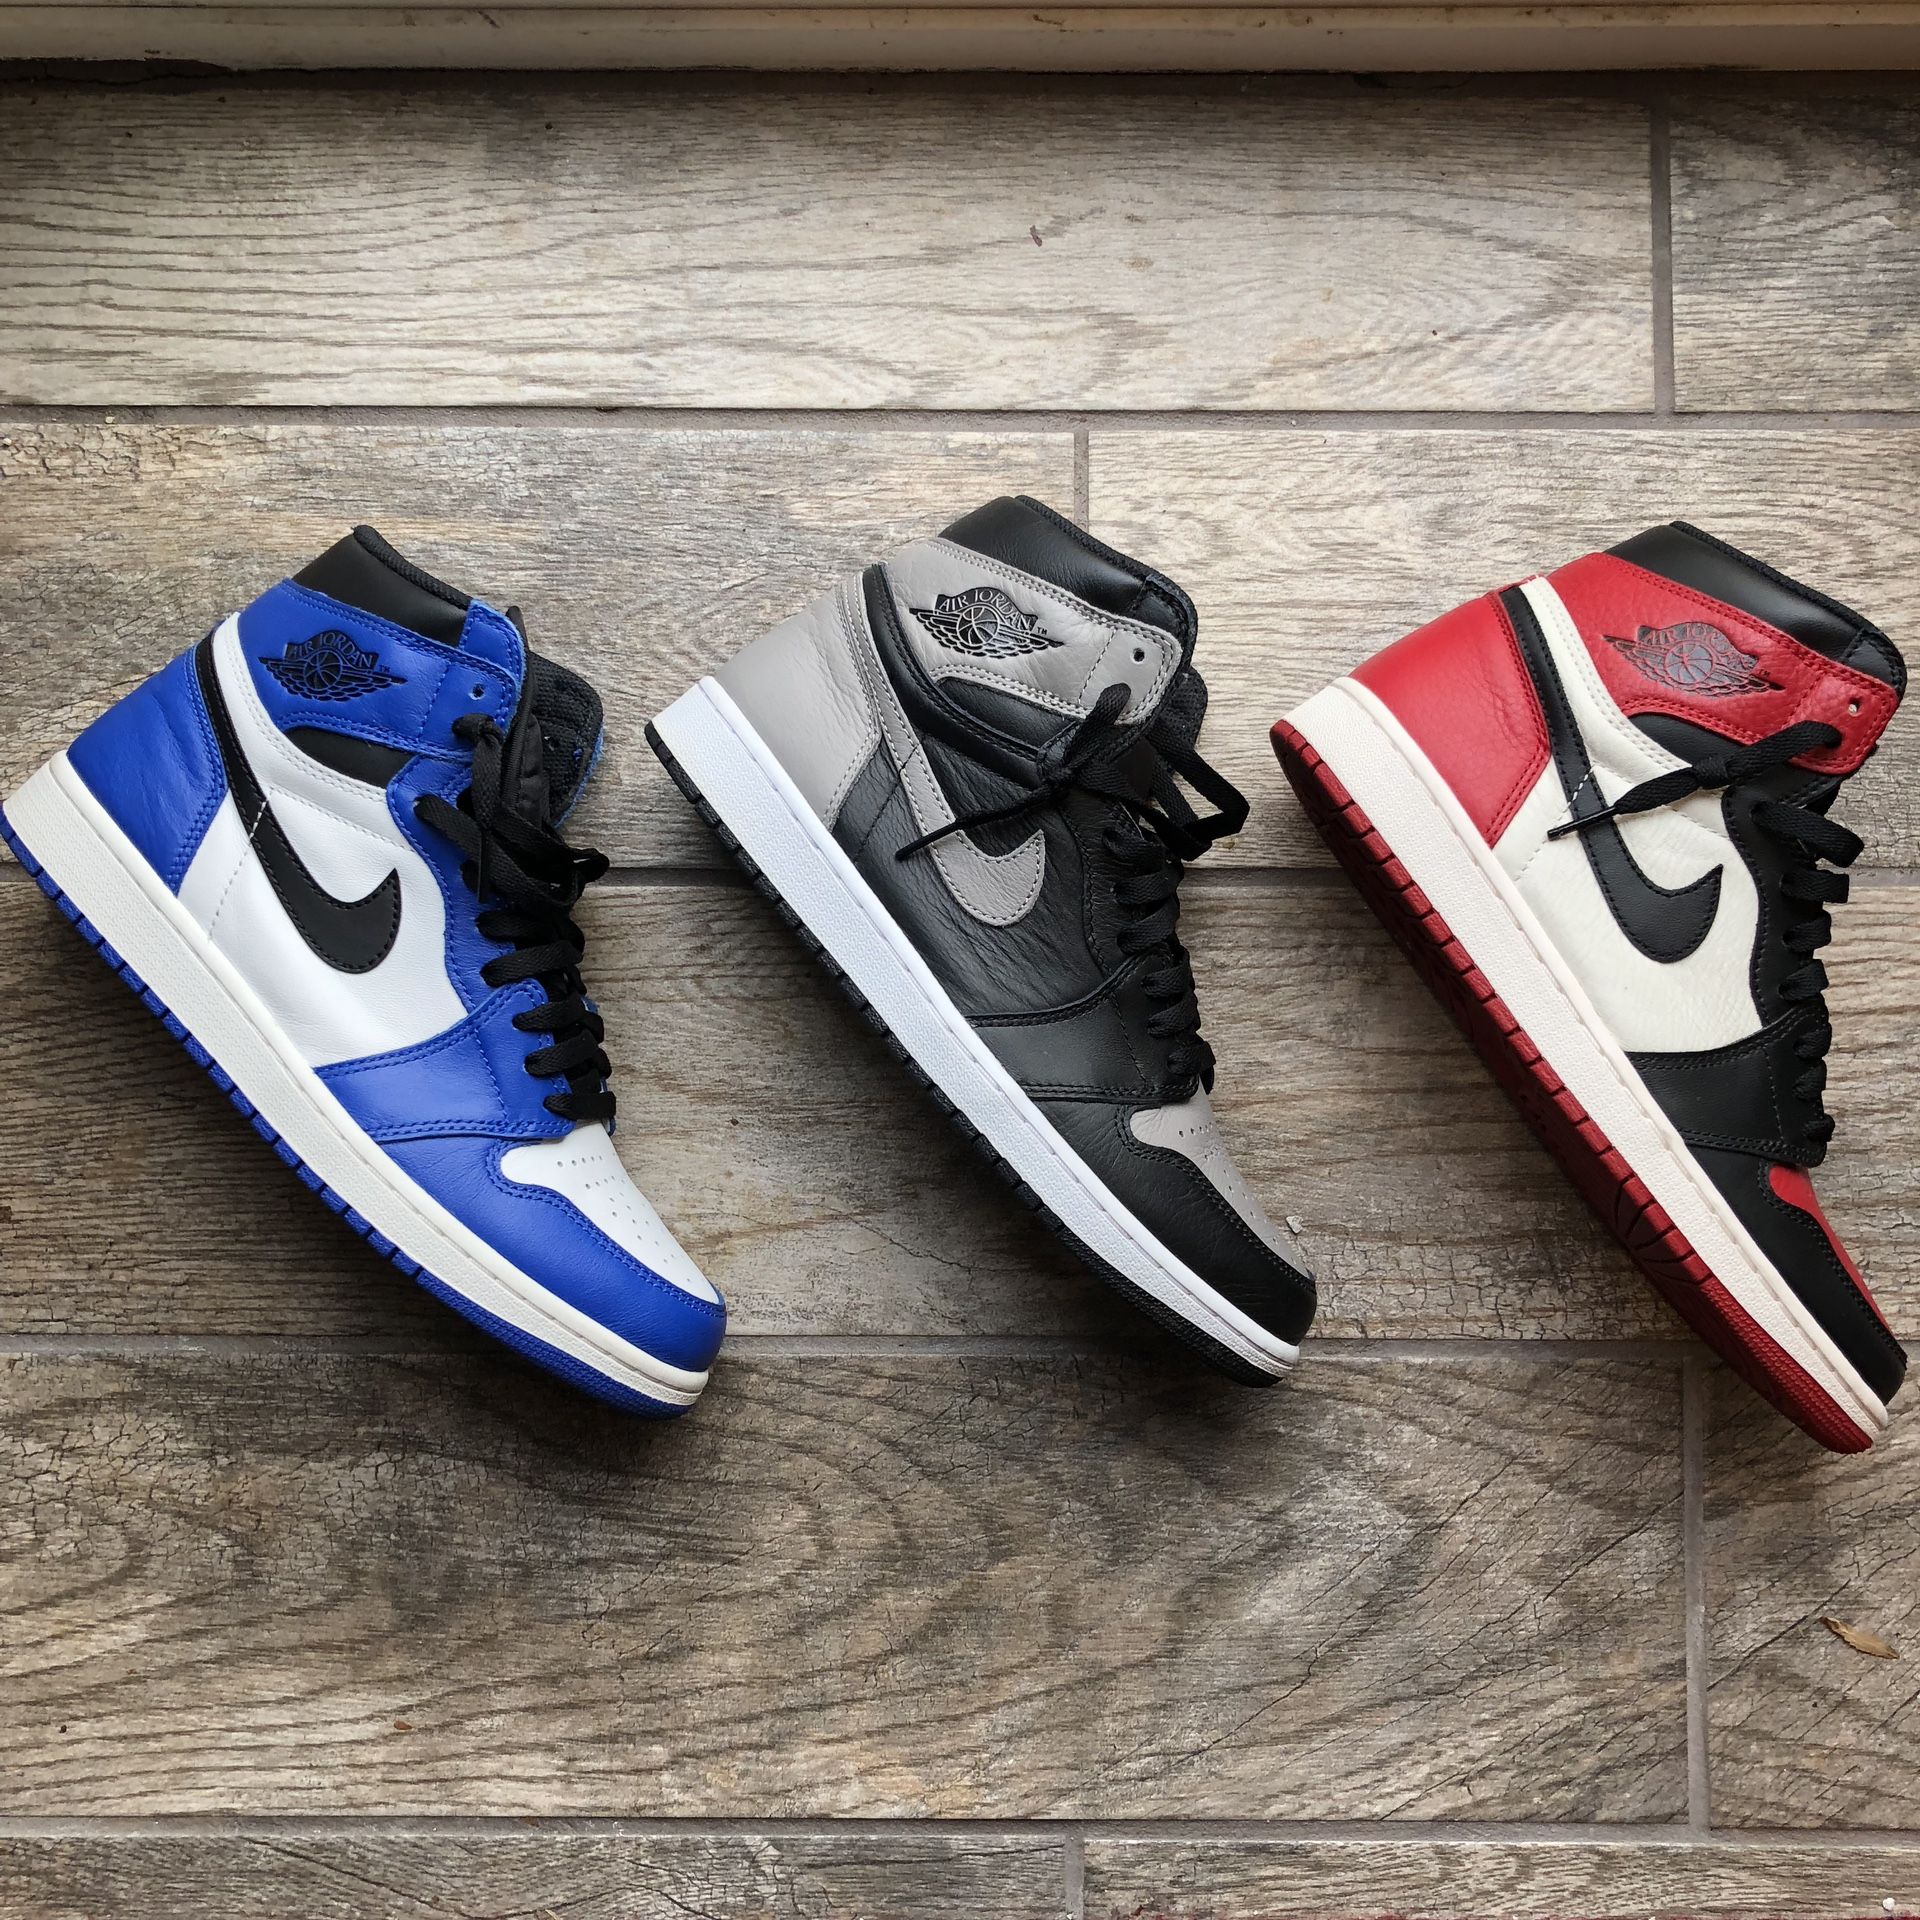 Three Jordan’s for 1 price. Size 9 {$700}